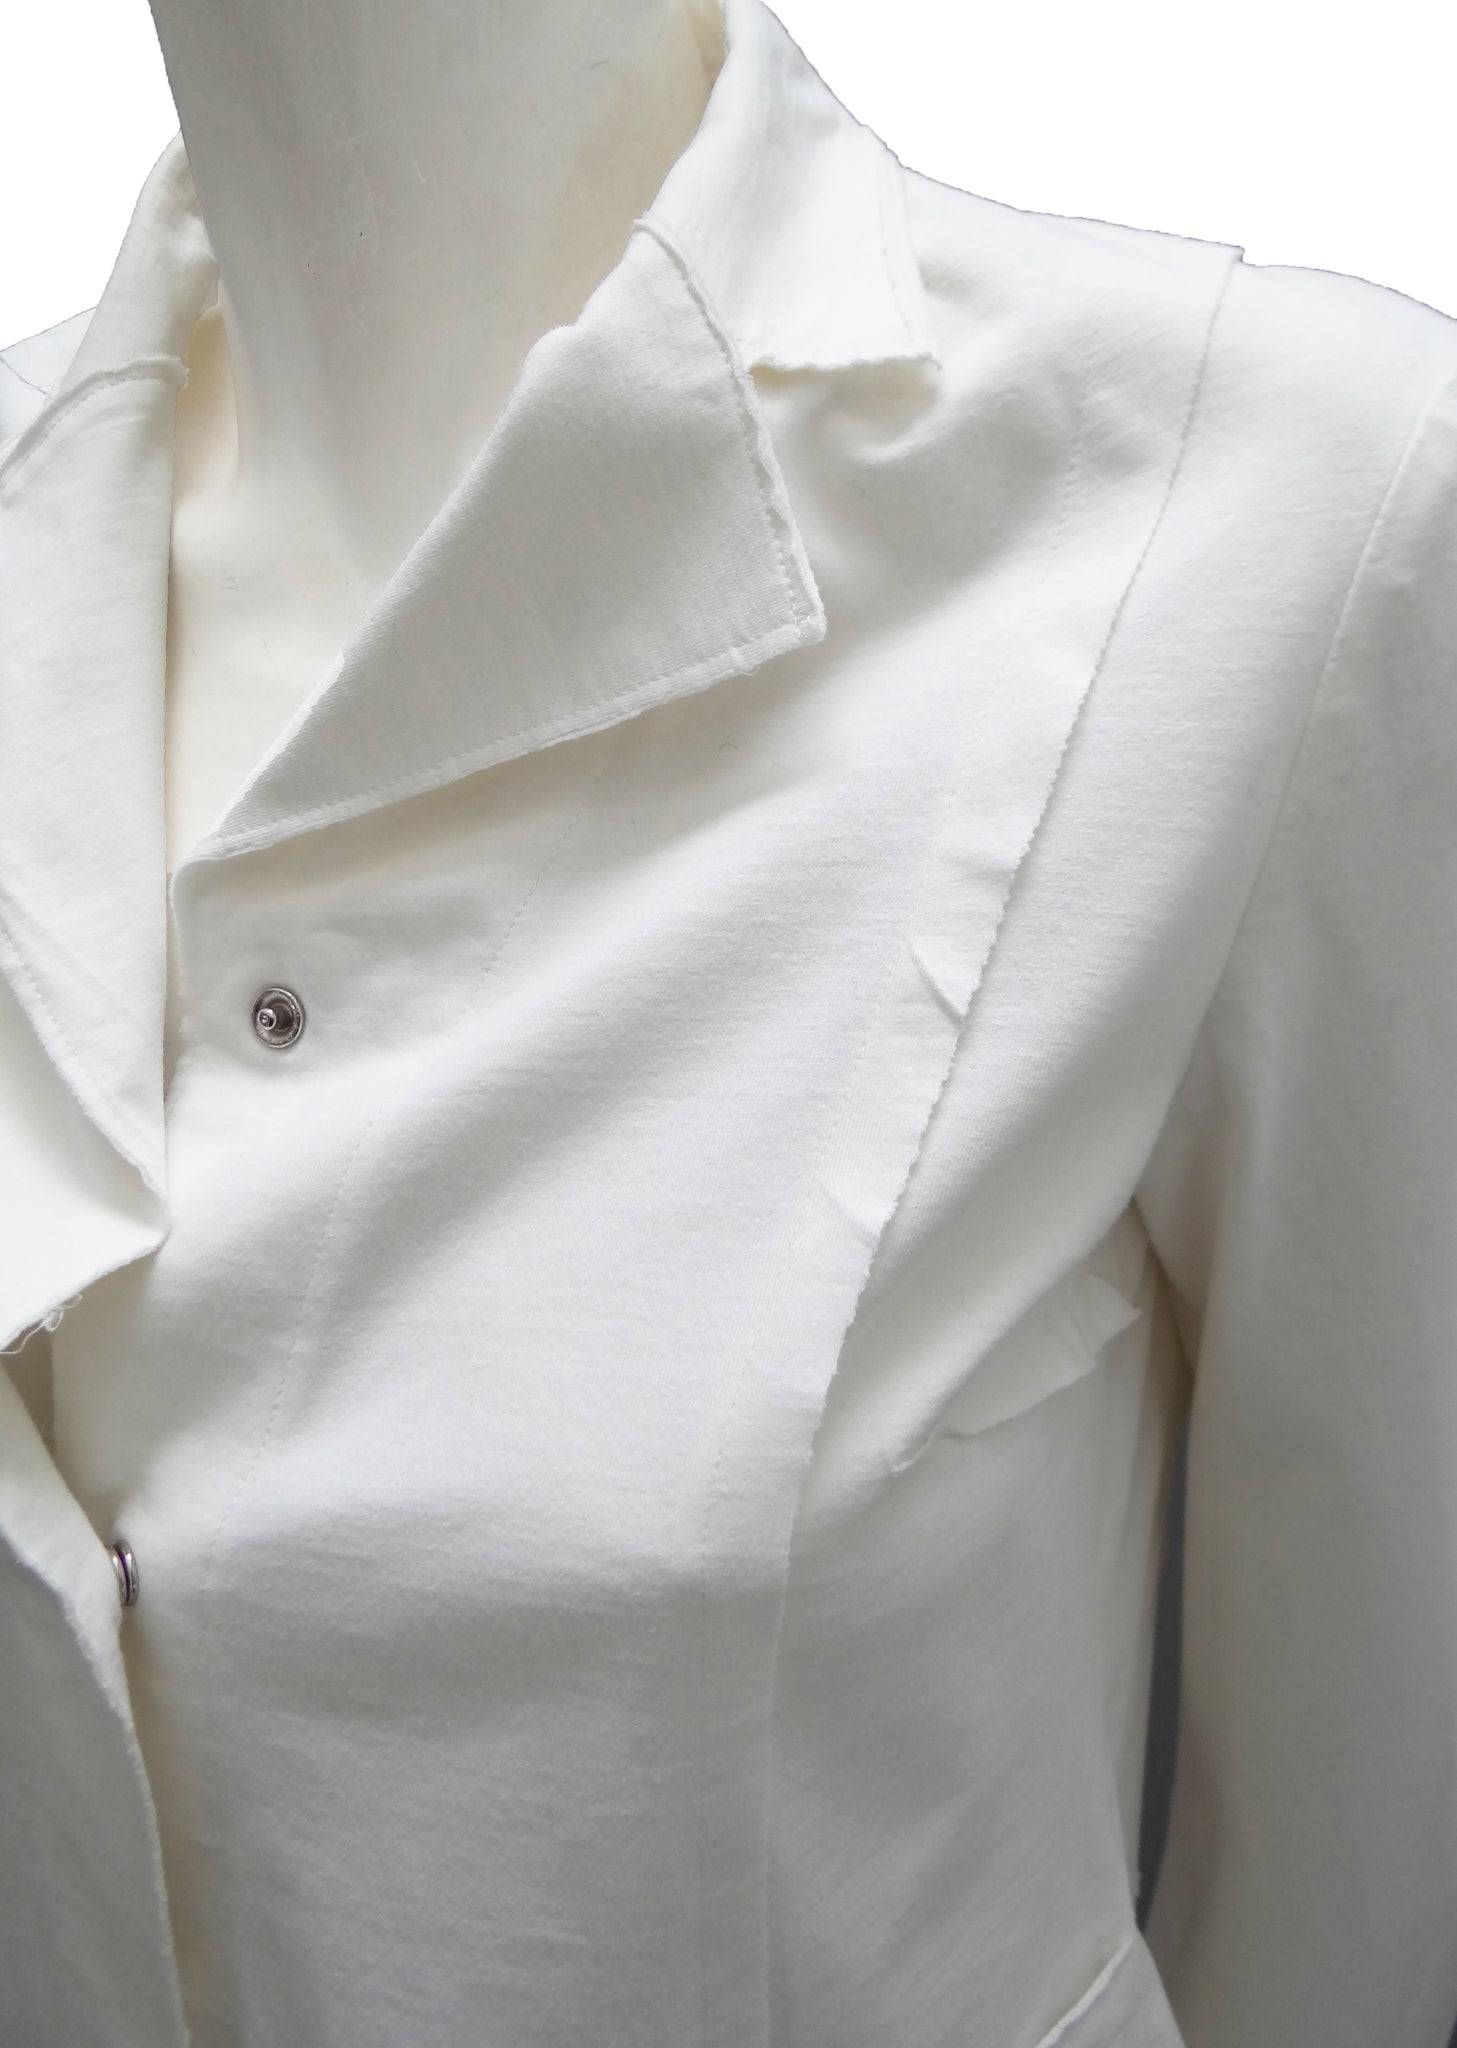 Kosuke Tsumura Deconstructed White Cotton Shirt / Jacket, UK10-12 ...